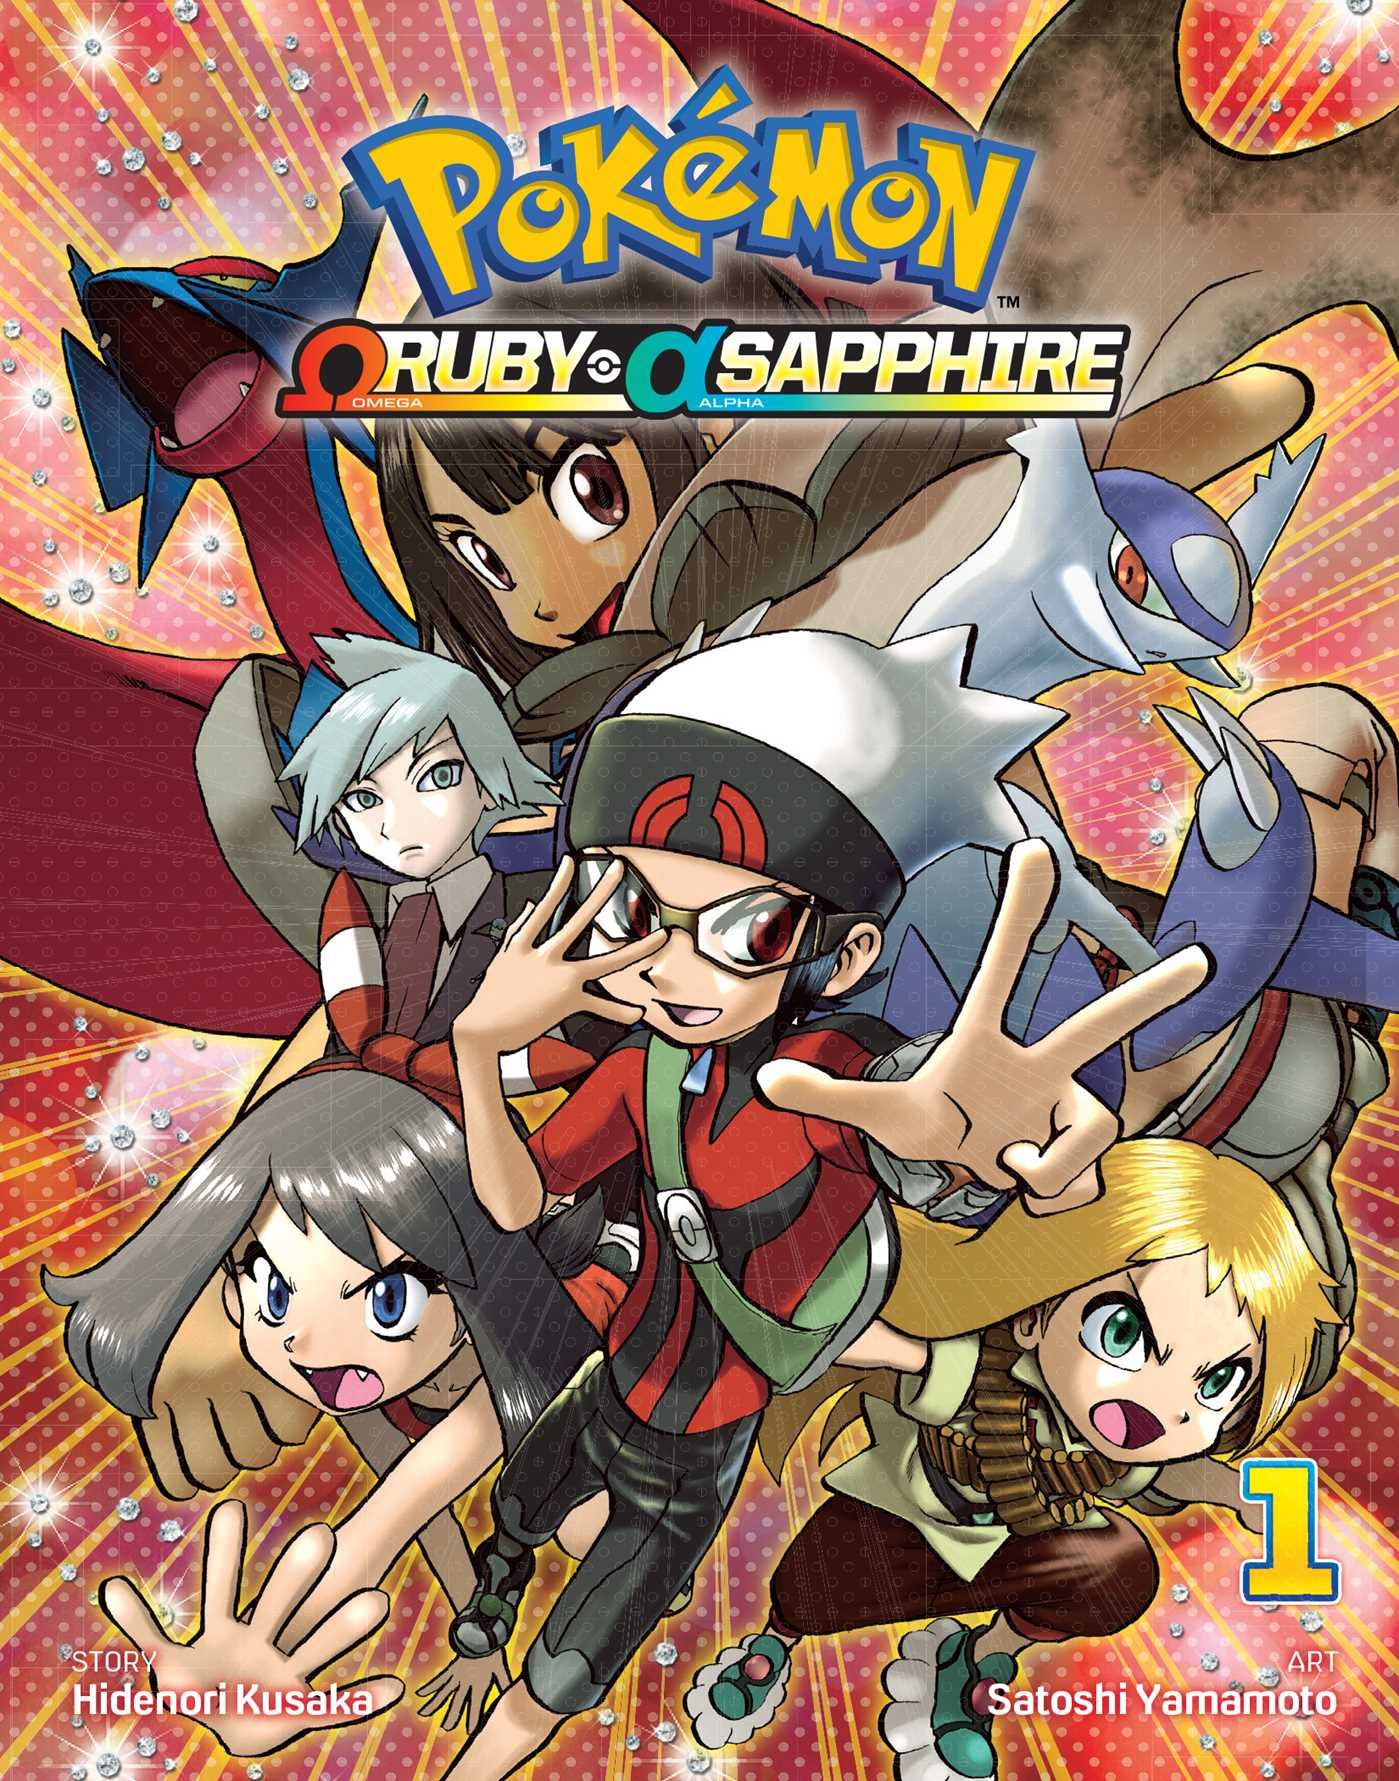 Full Sheet View - Pokemon Omega Ruby / Alpha Sapphire - 3rd